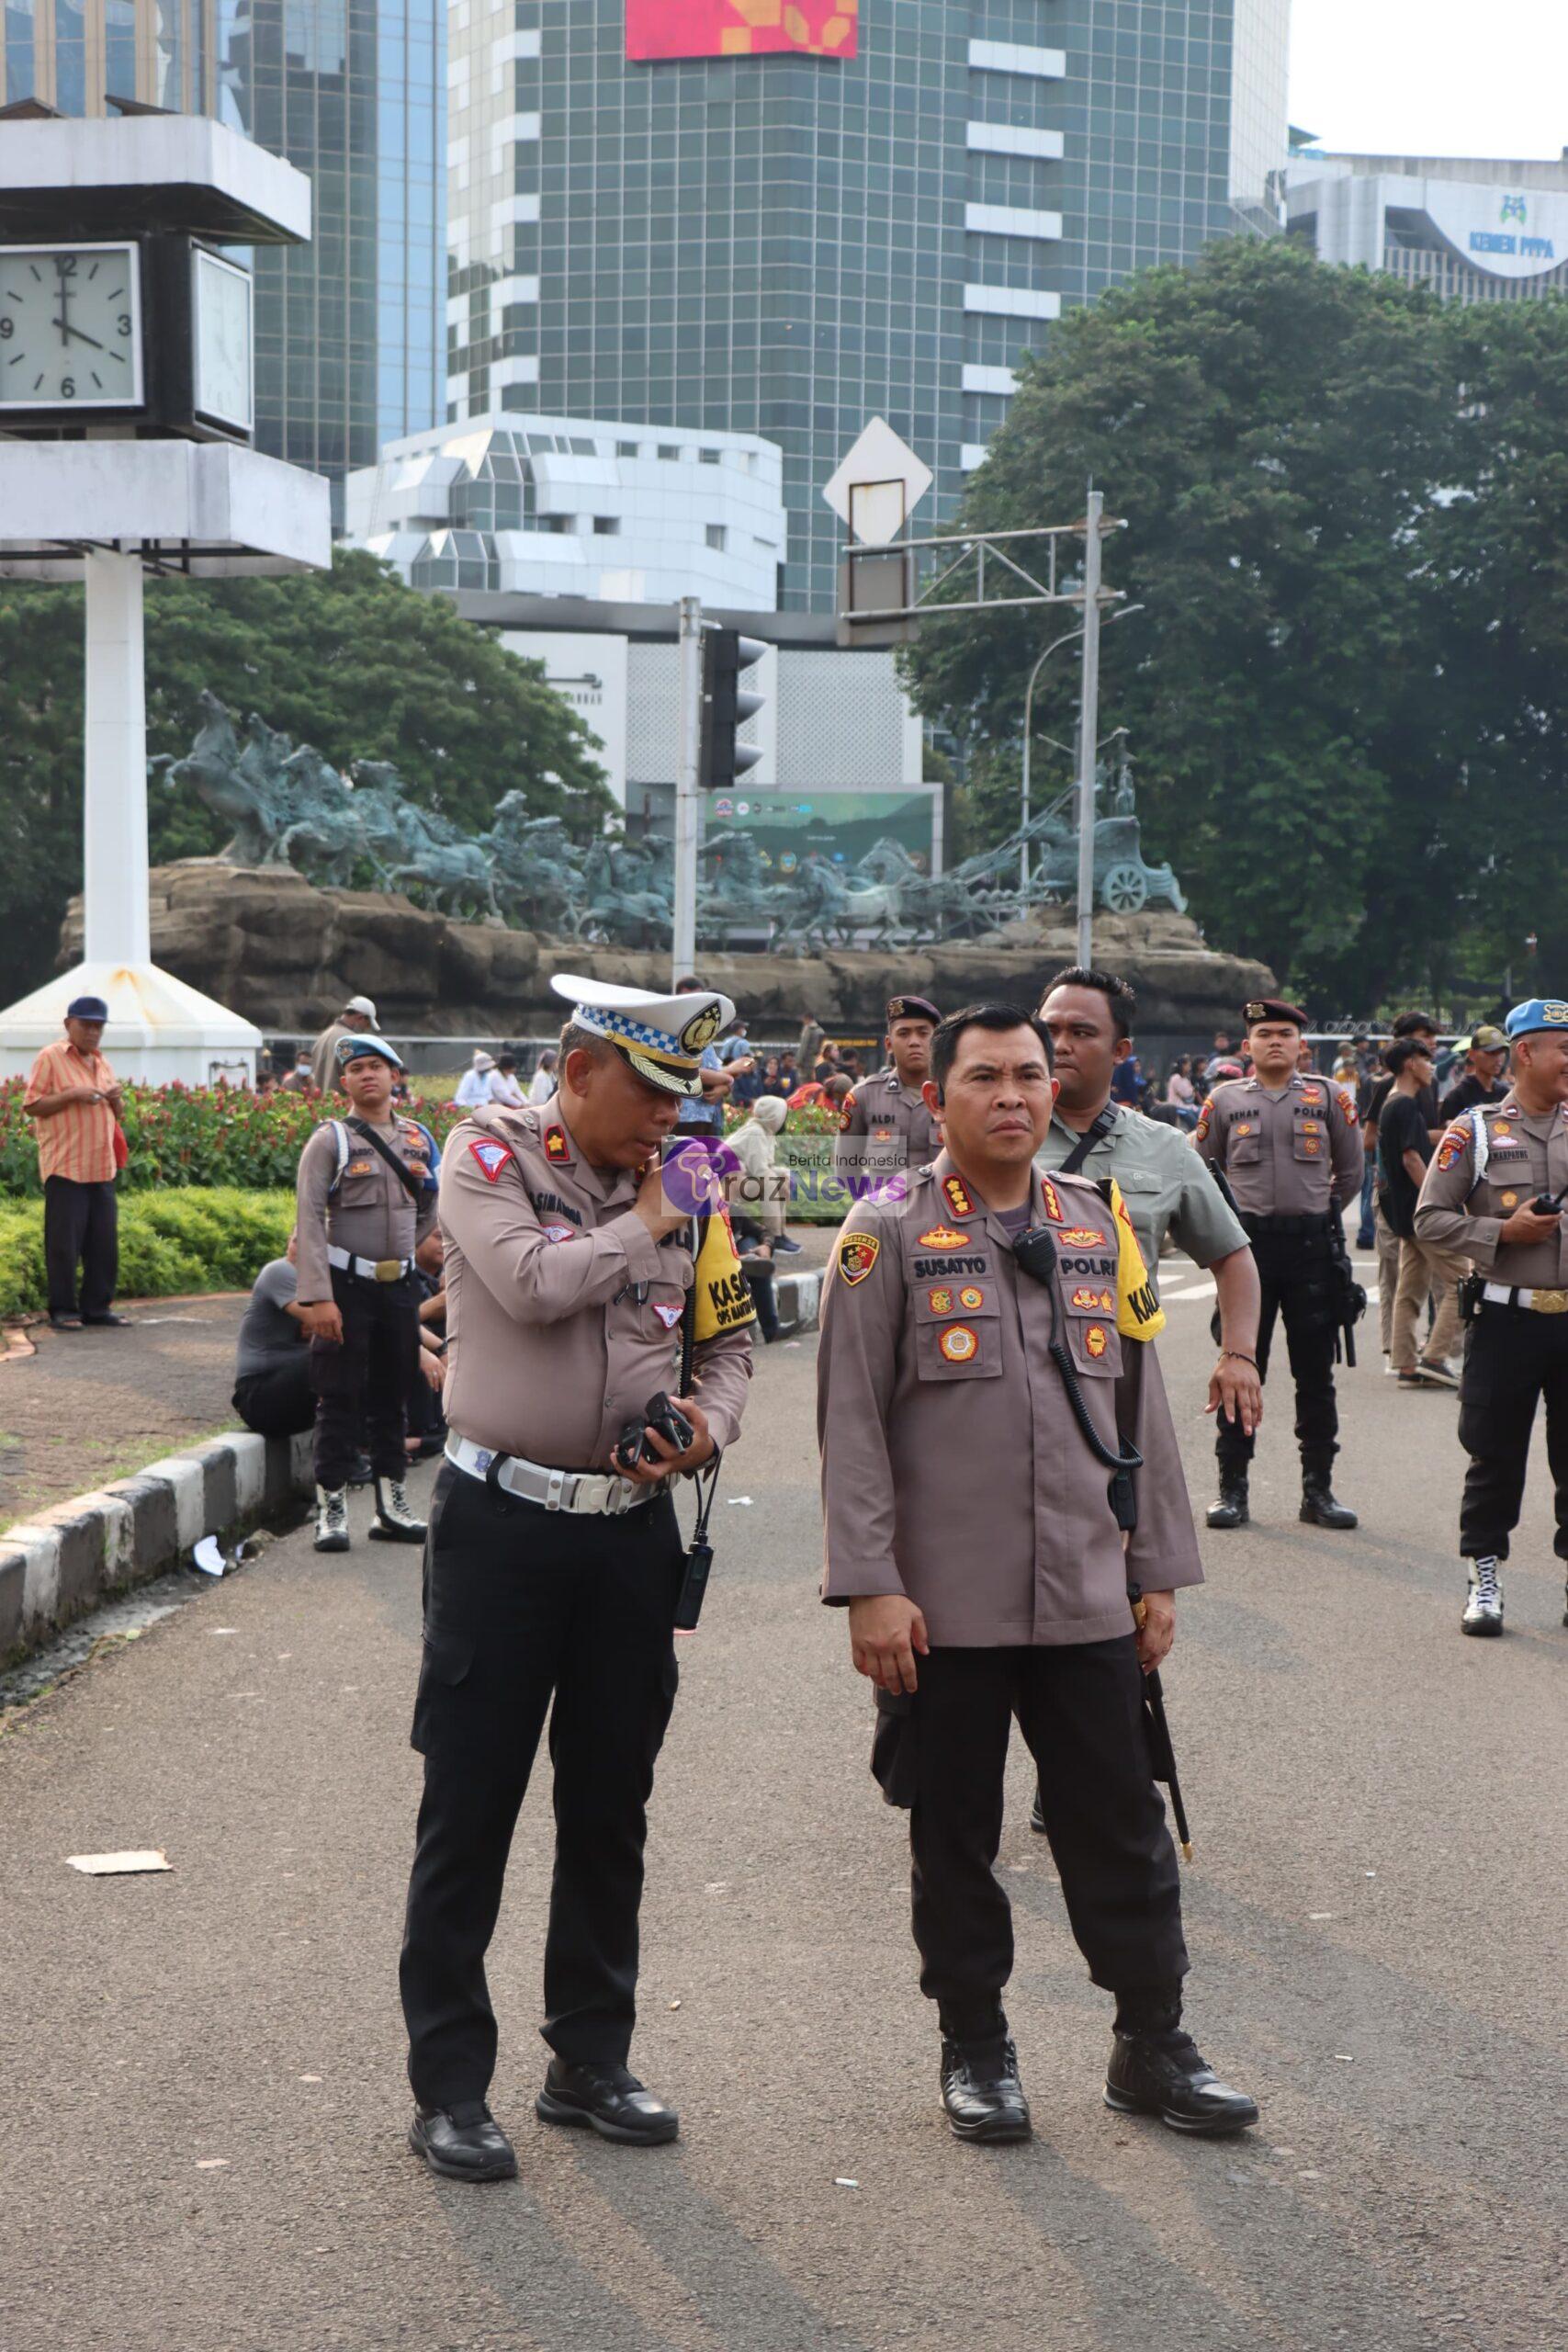 TNI – POLRI Terjunkan 2.713 Personil Gabungan, Siap Amankan Aksi Unjuk Rasa